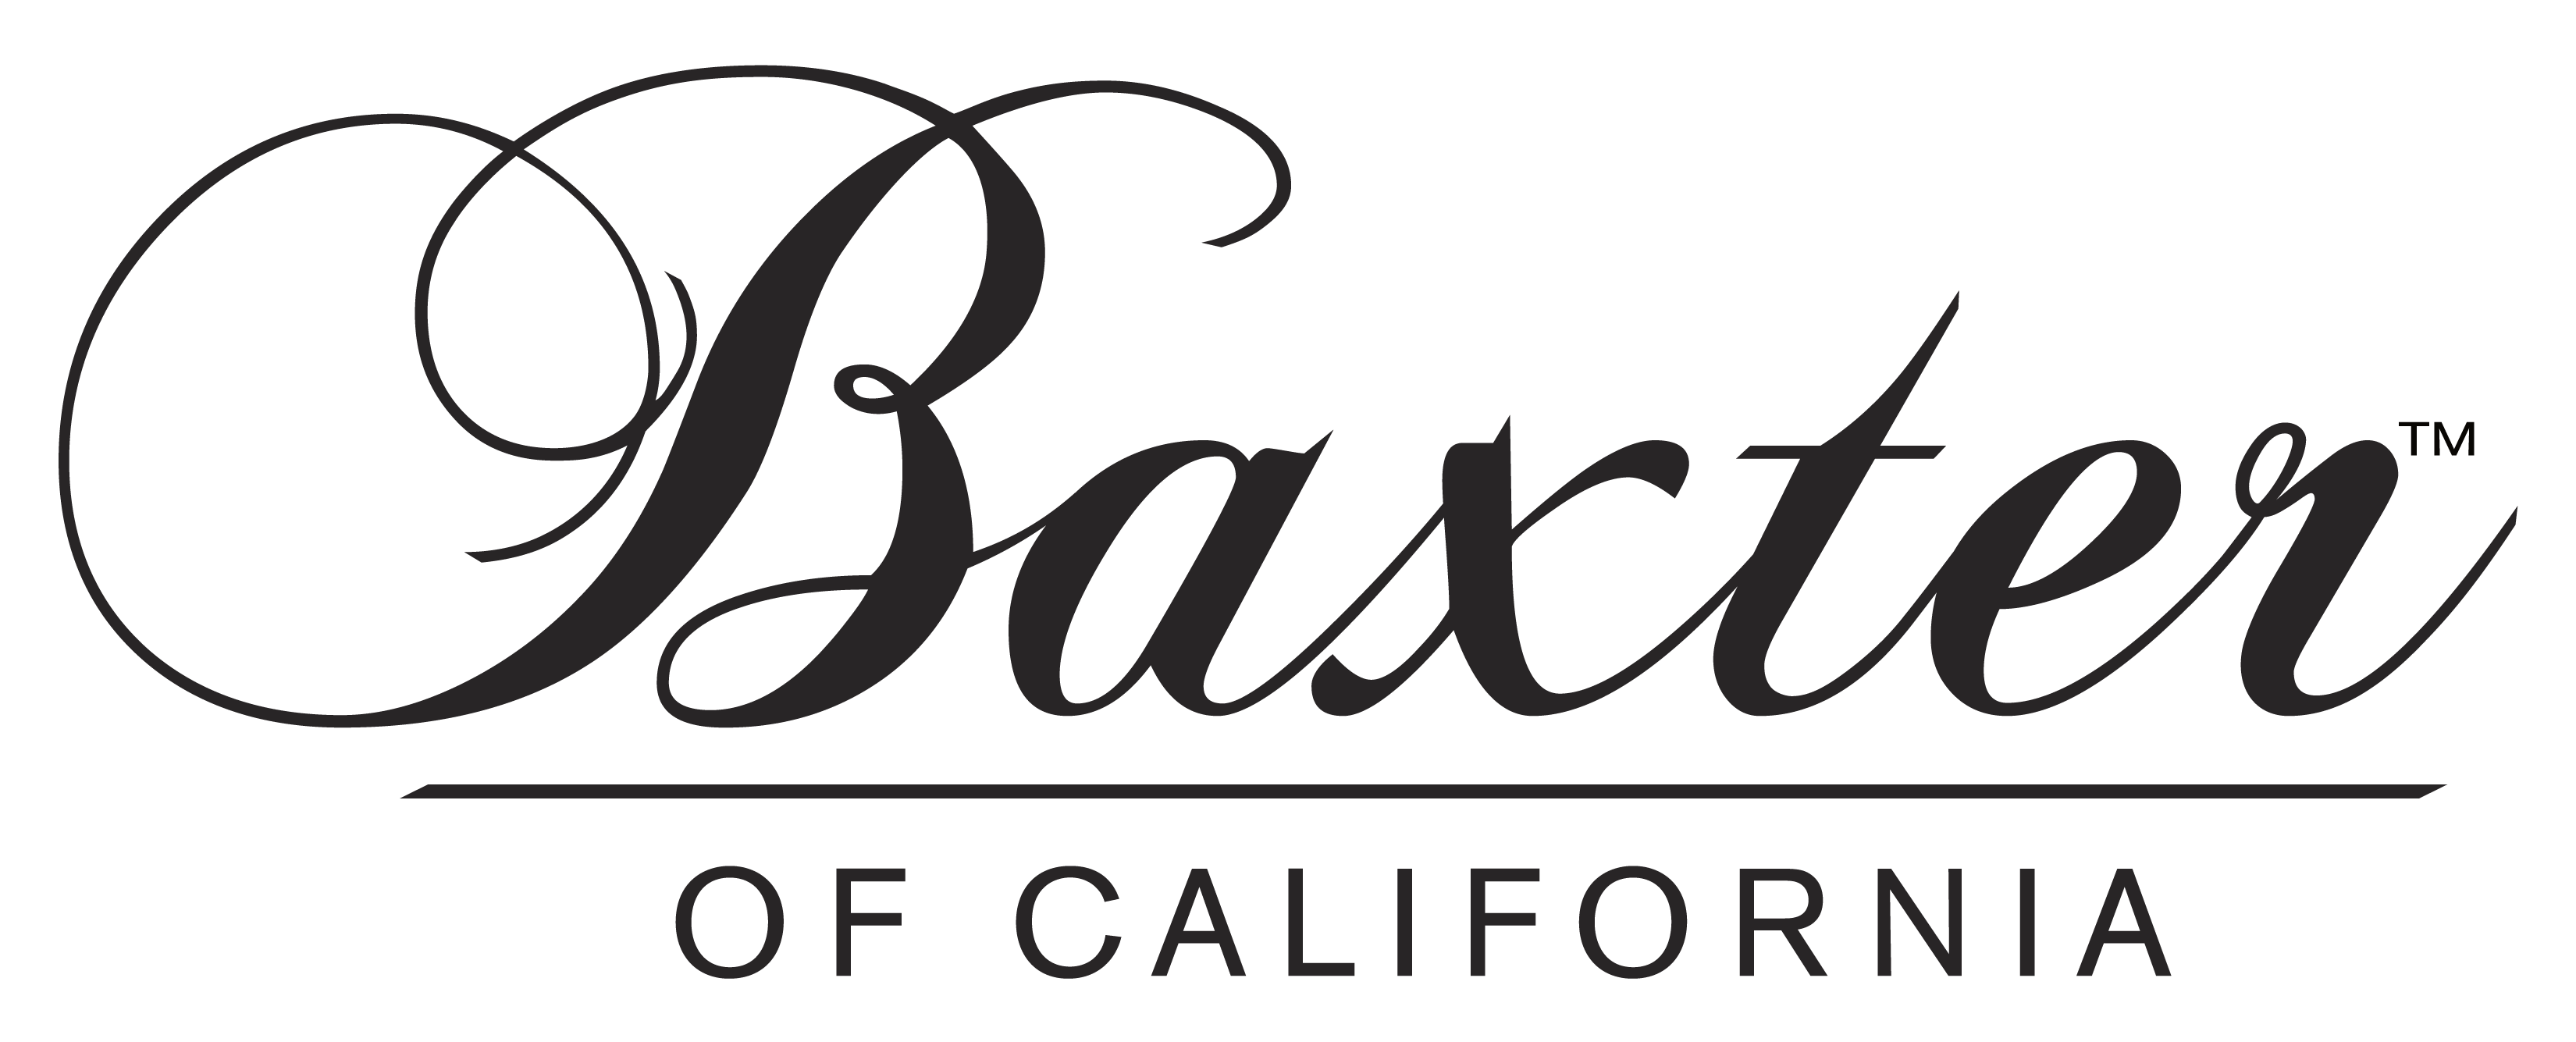 California Logo - Baxter of California